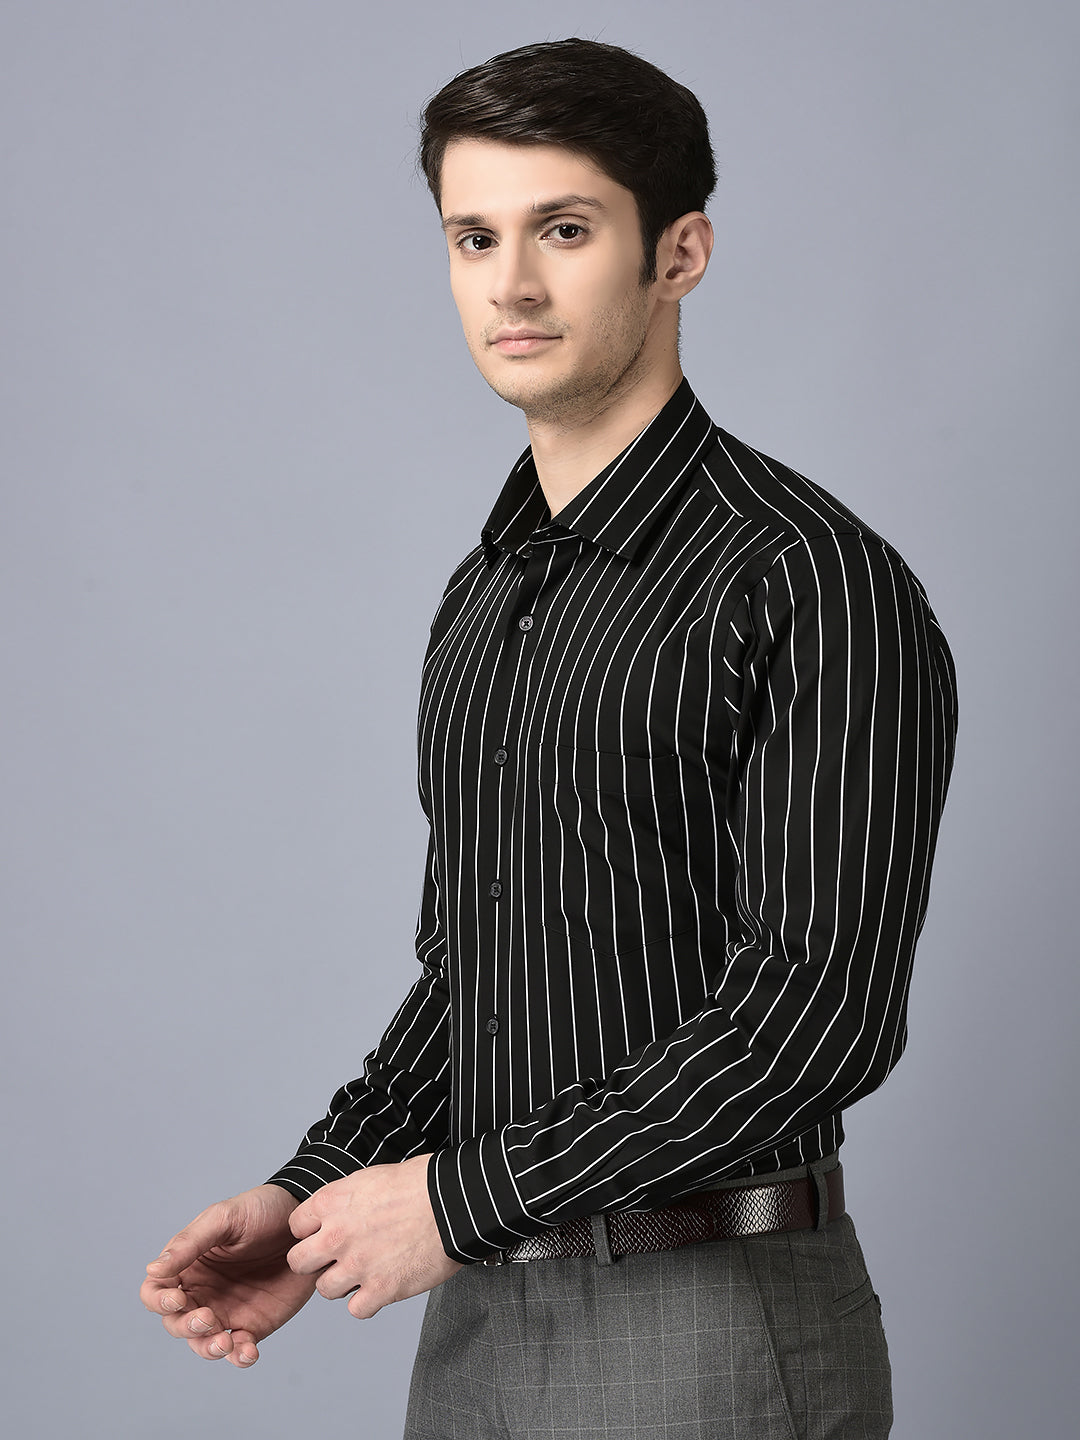 CANOE MEN Formal Shirt Black Color Cotton Fabric Button Closure Striped